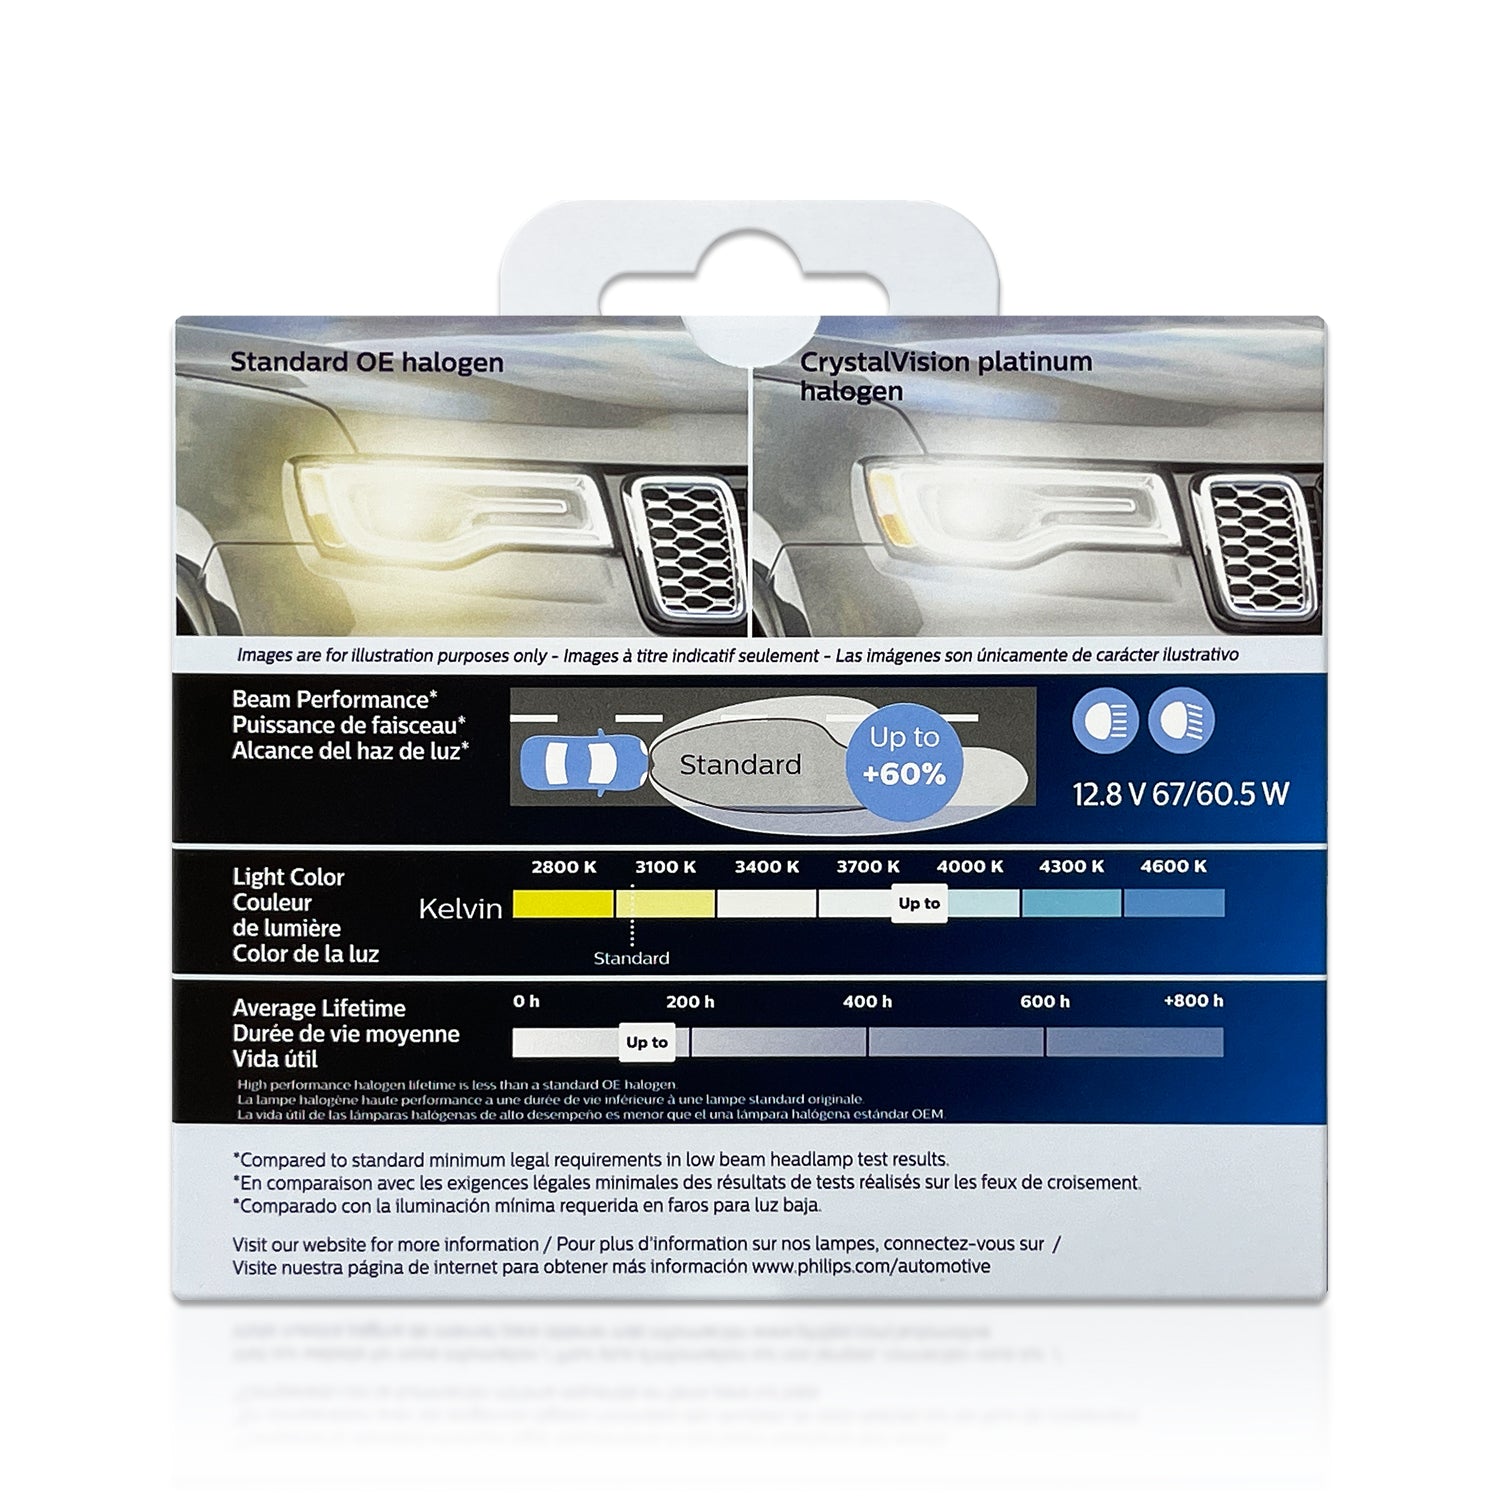 9003 H4 Philips 9003NGPS2 NightGuide Platinum Halogen Bulbs – HID CONCEPT